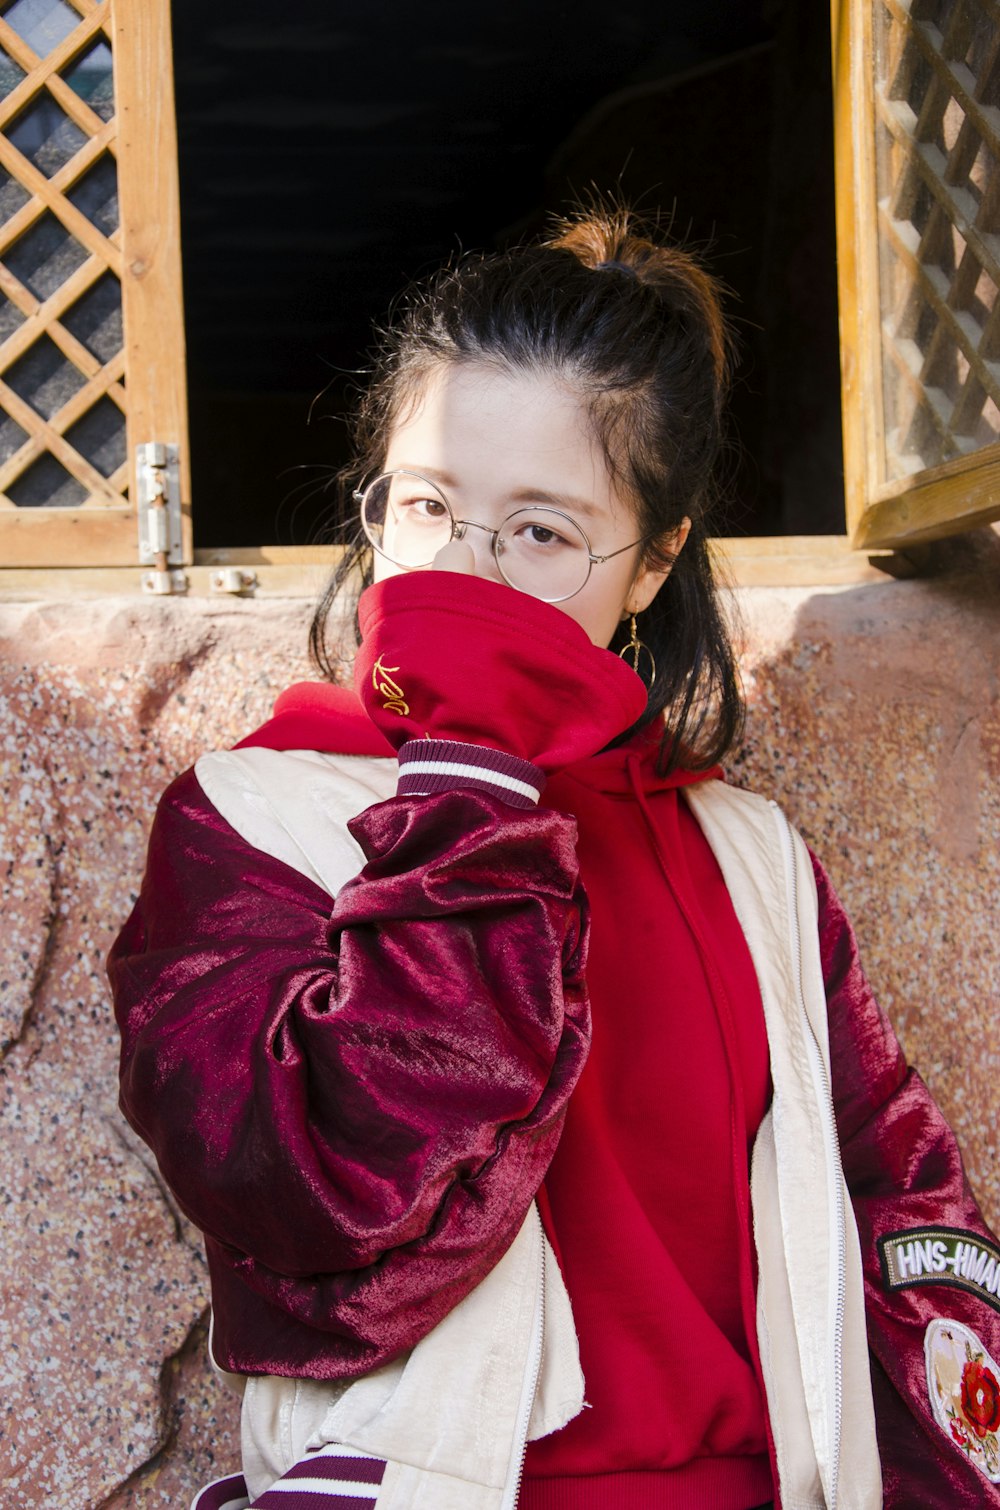 Donna che indossa una giacca rossa e bianca foto – Cina Immagine gratuita  su Unsplash